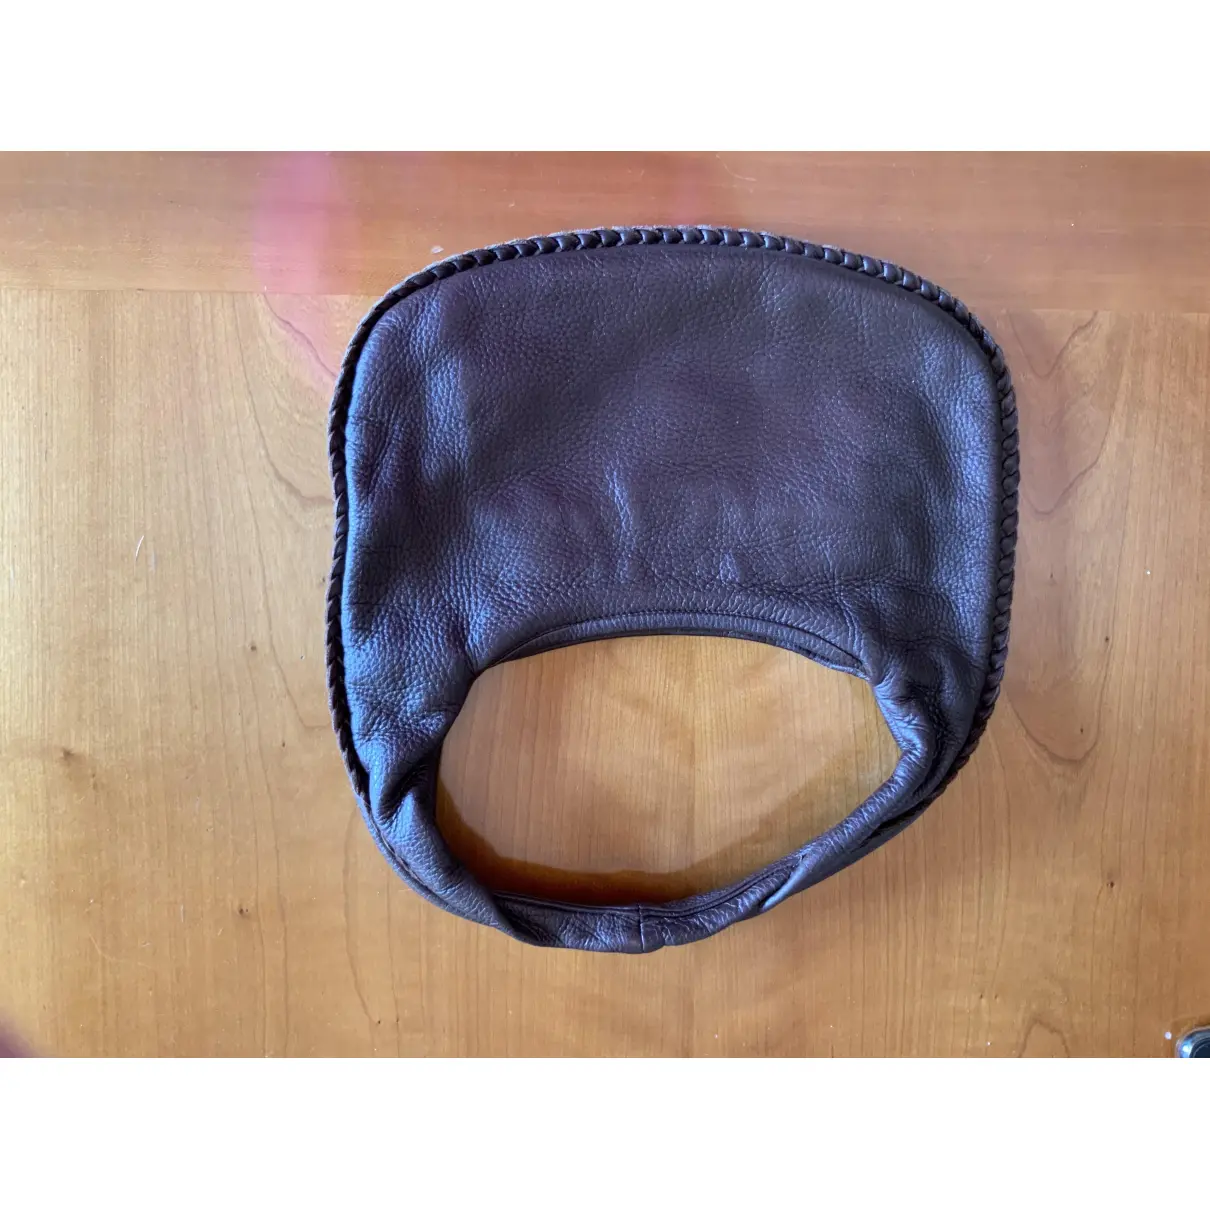 Buy Bottega Veneta Jodie leather handbag online